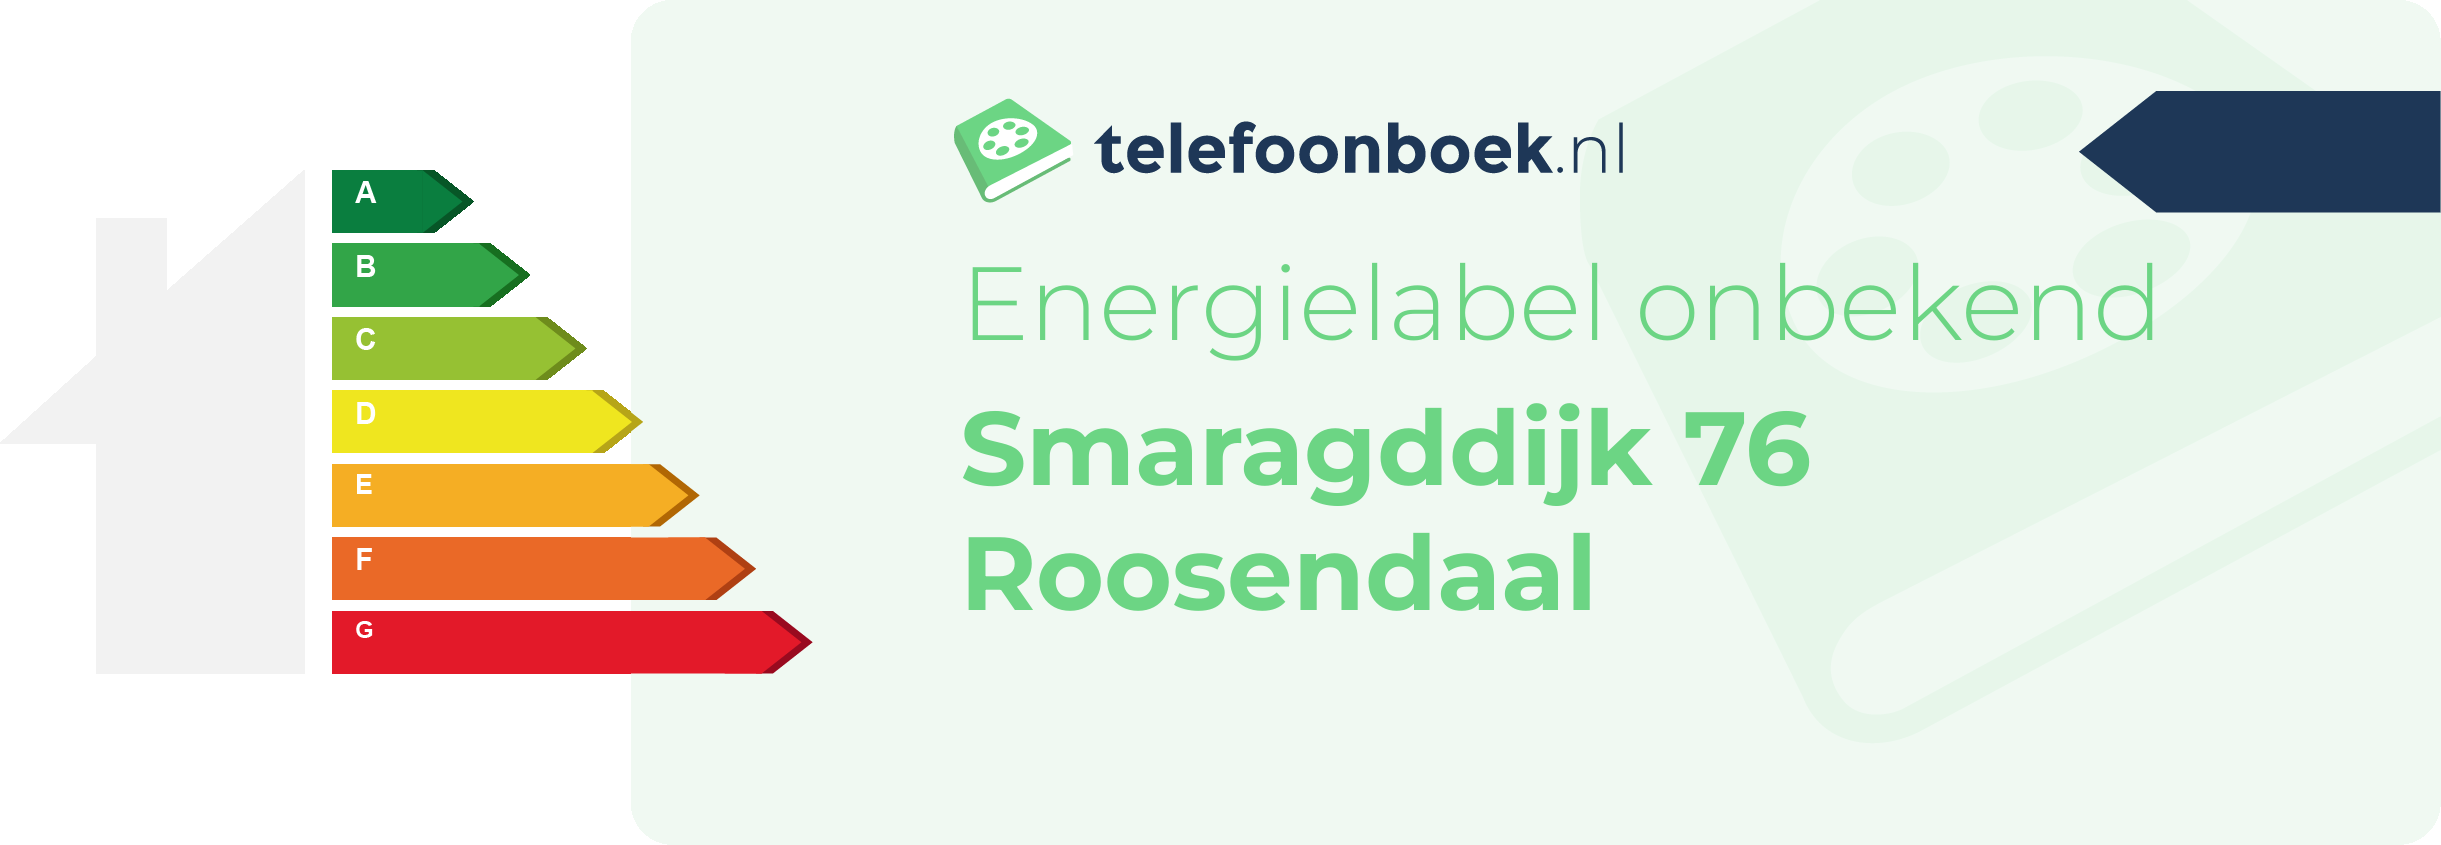 Energielabel Smaragddijk 76 Roosendaal